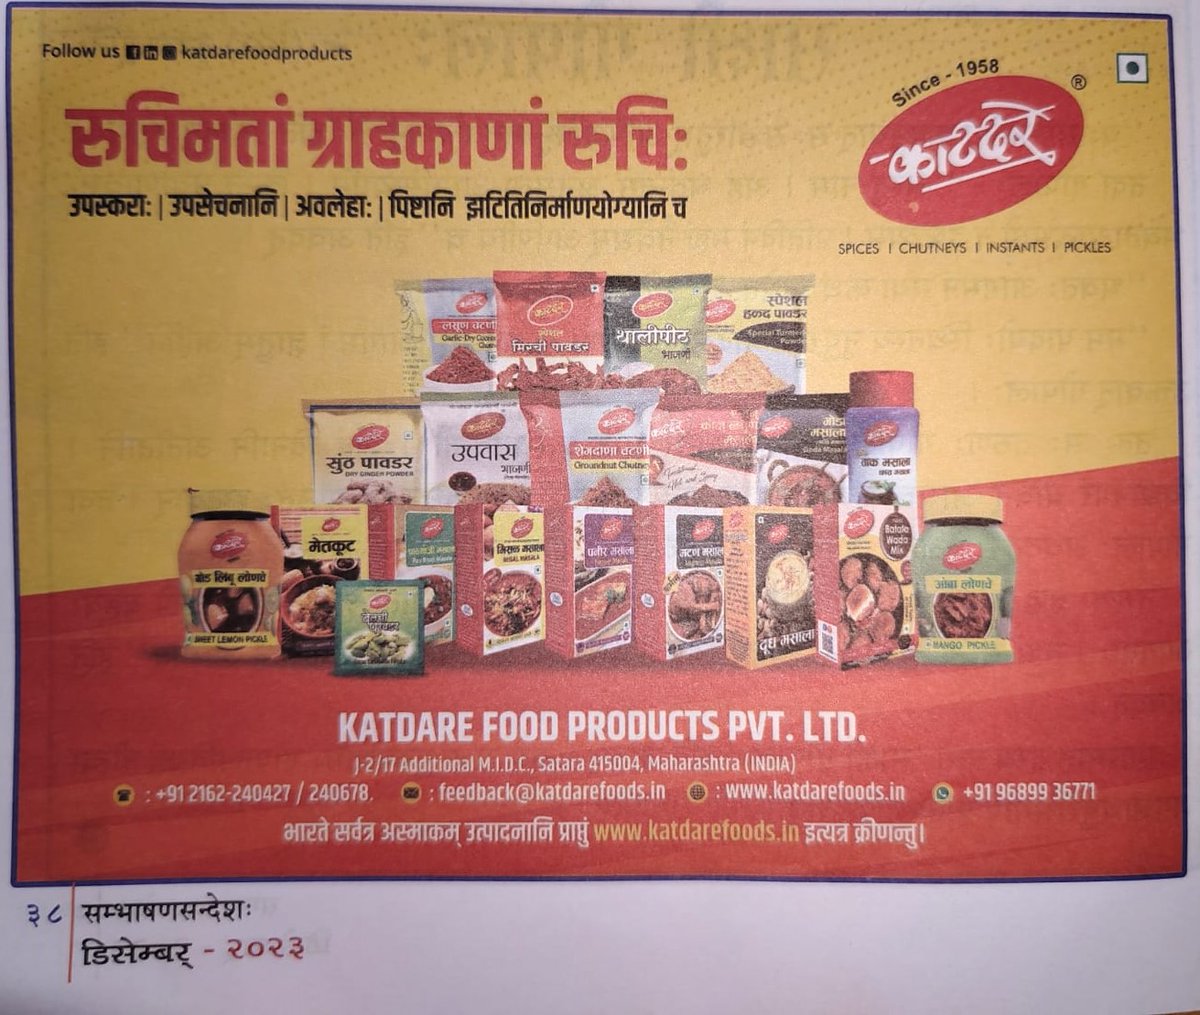 Advertisement of spices in Sanskrit in the world's best Sanskrit magazin 'सम्भाषणसन्देशः'
@PMOIndia @EduMinOfIndia @CentralSanskrit @shrivarakhedi @dinesh_kamat @ChamuKShastry @Samskritaputra @samskritam @Samskritam2025 @samskritbharati @SamPromotion @Sampadananda #sanskritforall